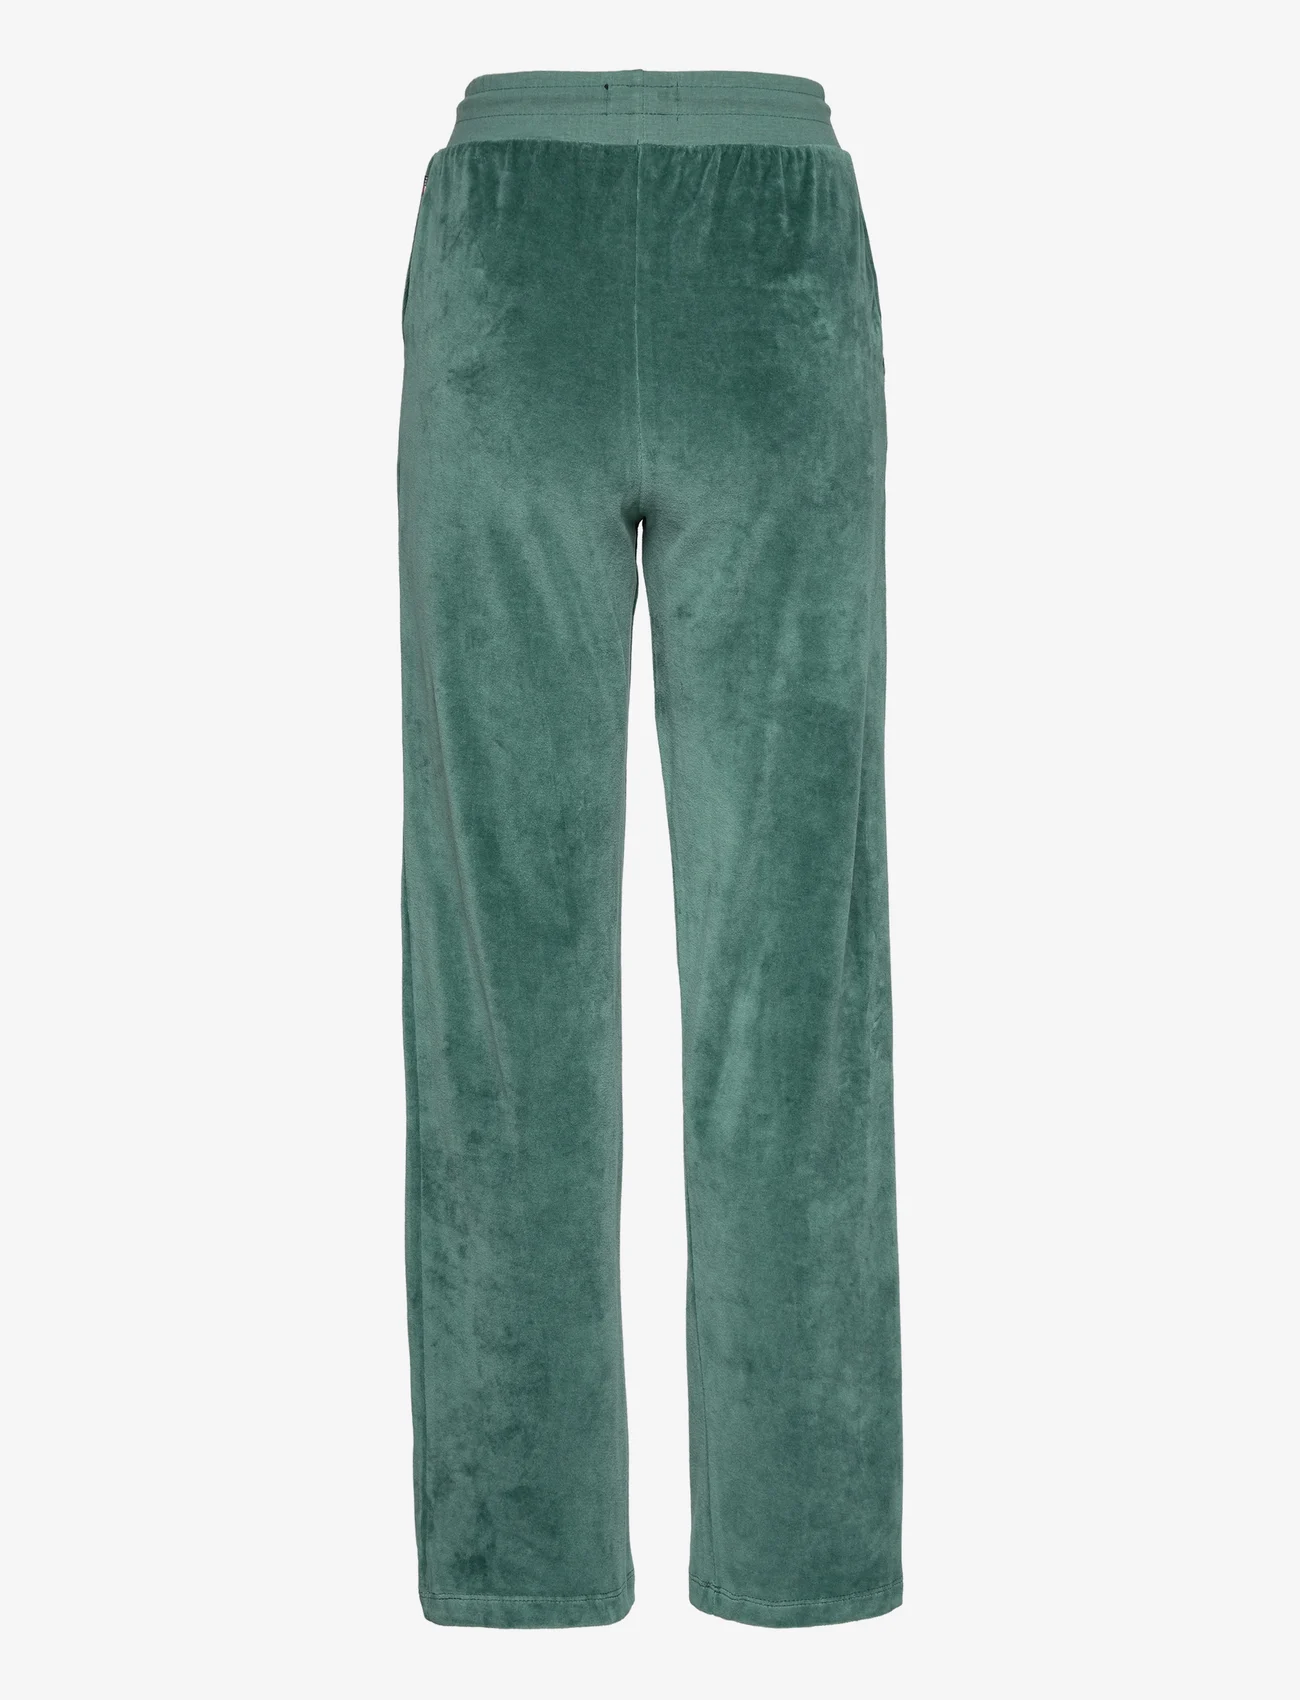 Lexington Clothing - Leona Organic Cotton Velour Pants - jogas bikses - green - 1